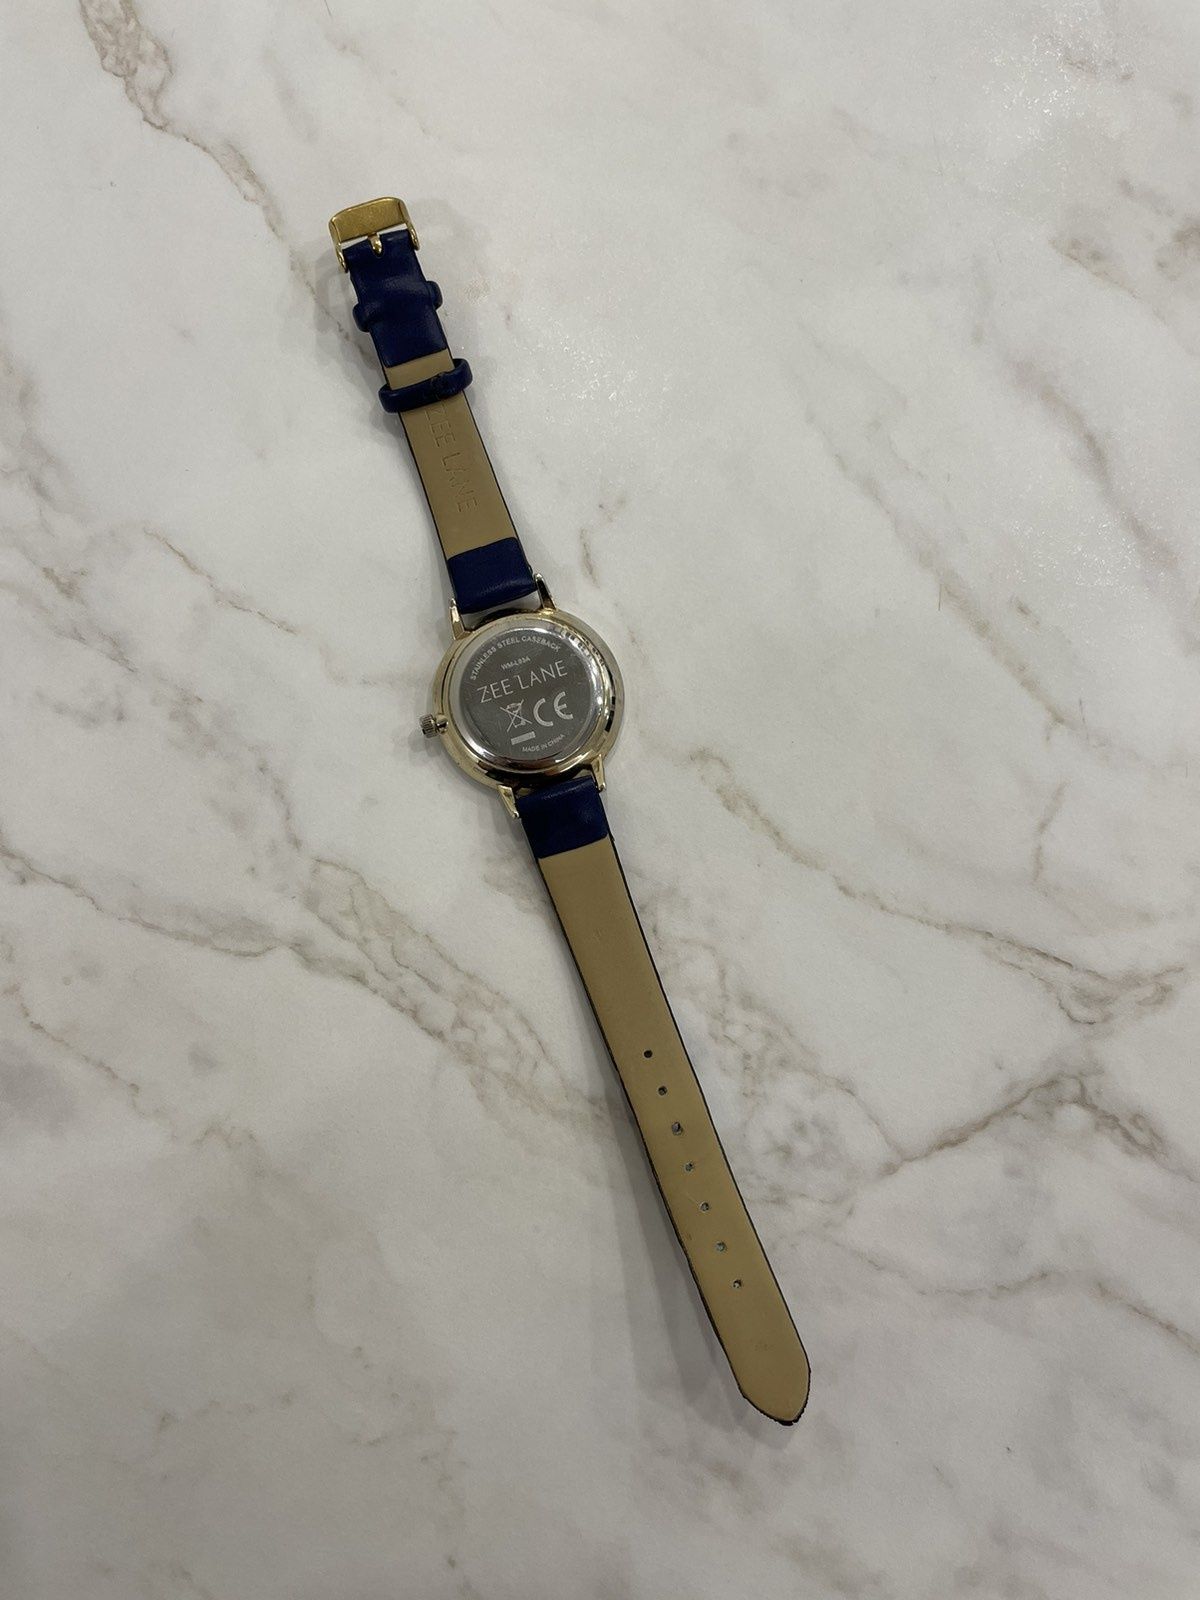 Дамски луксозен часовник ZEE LANE